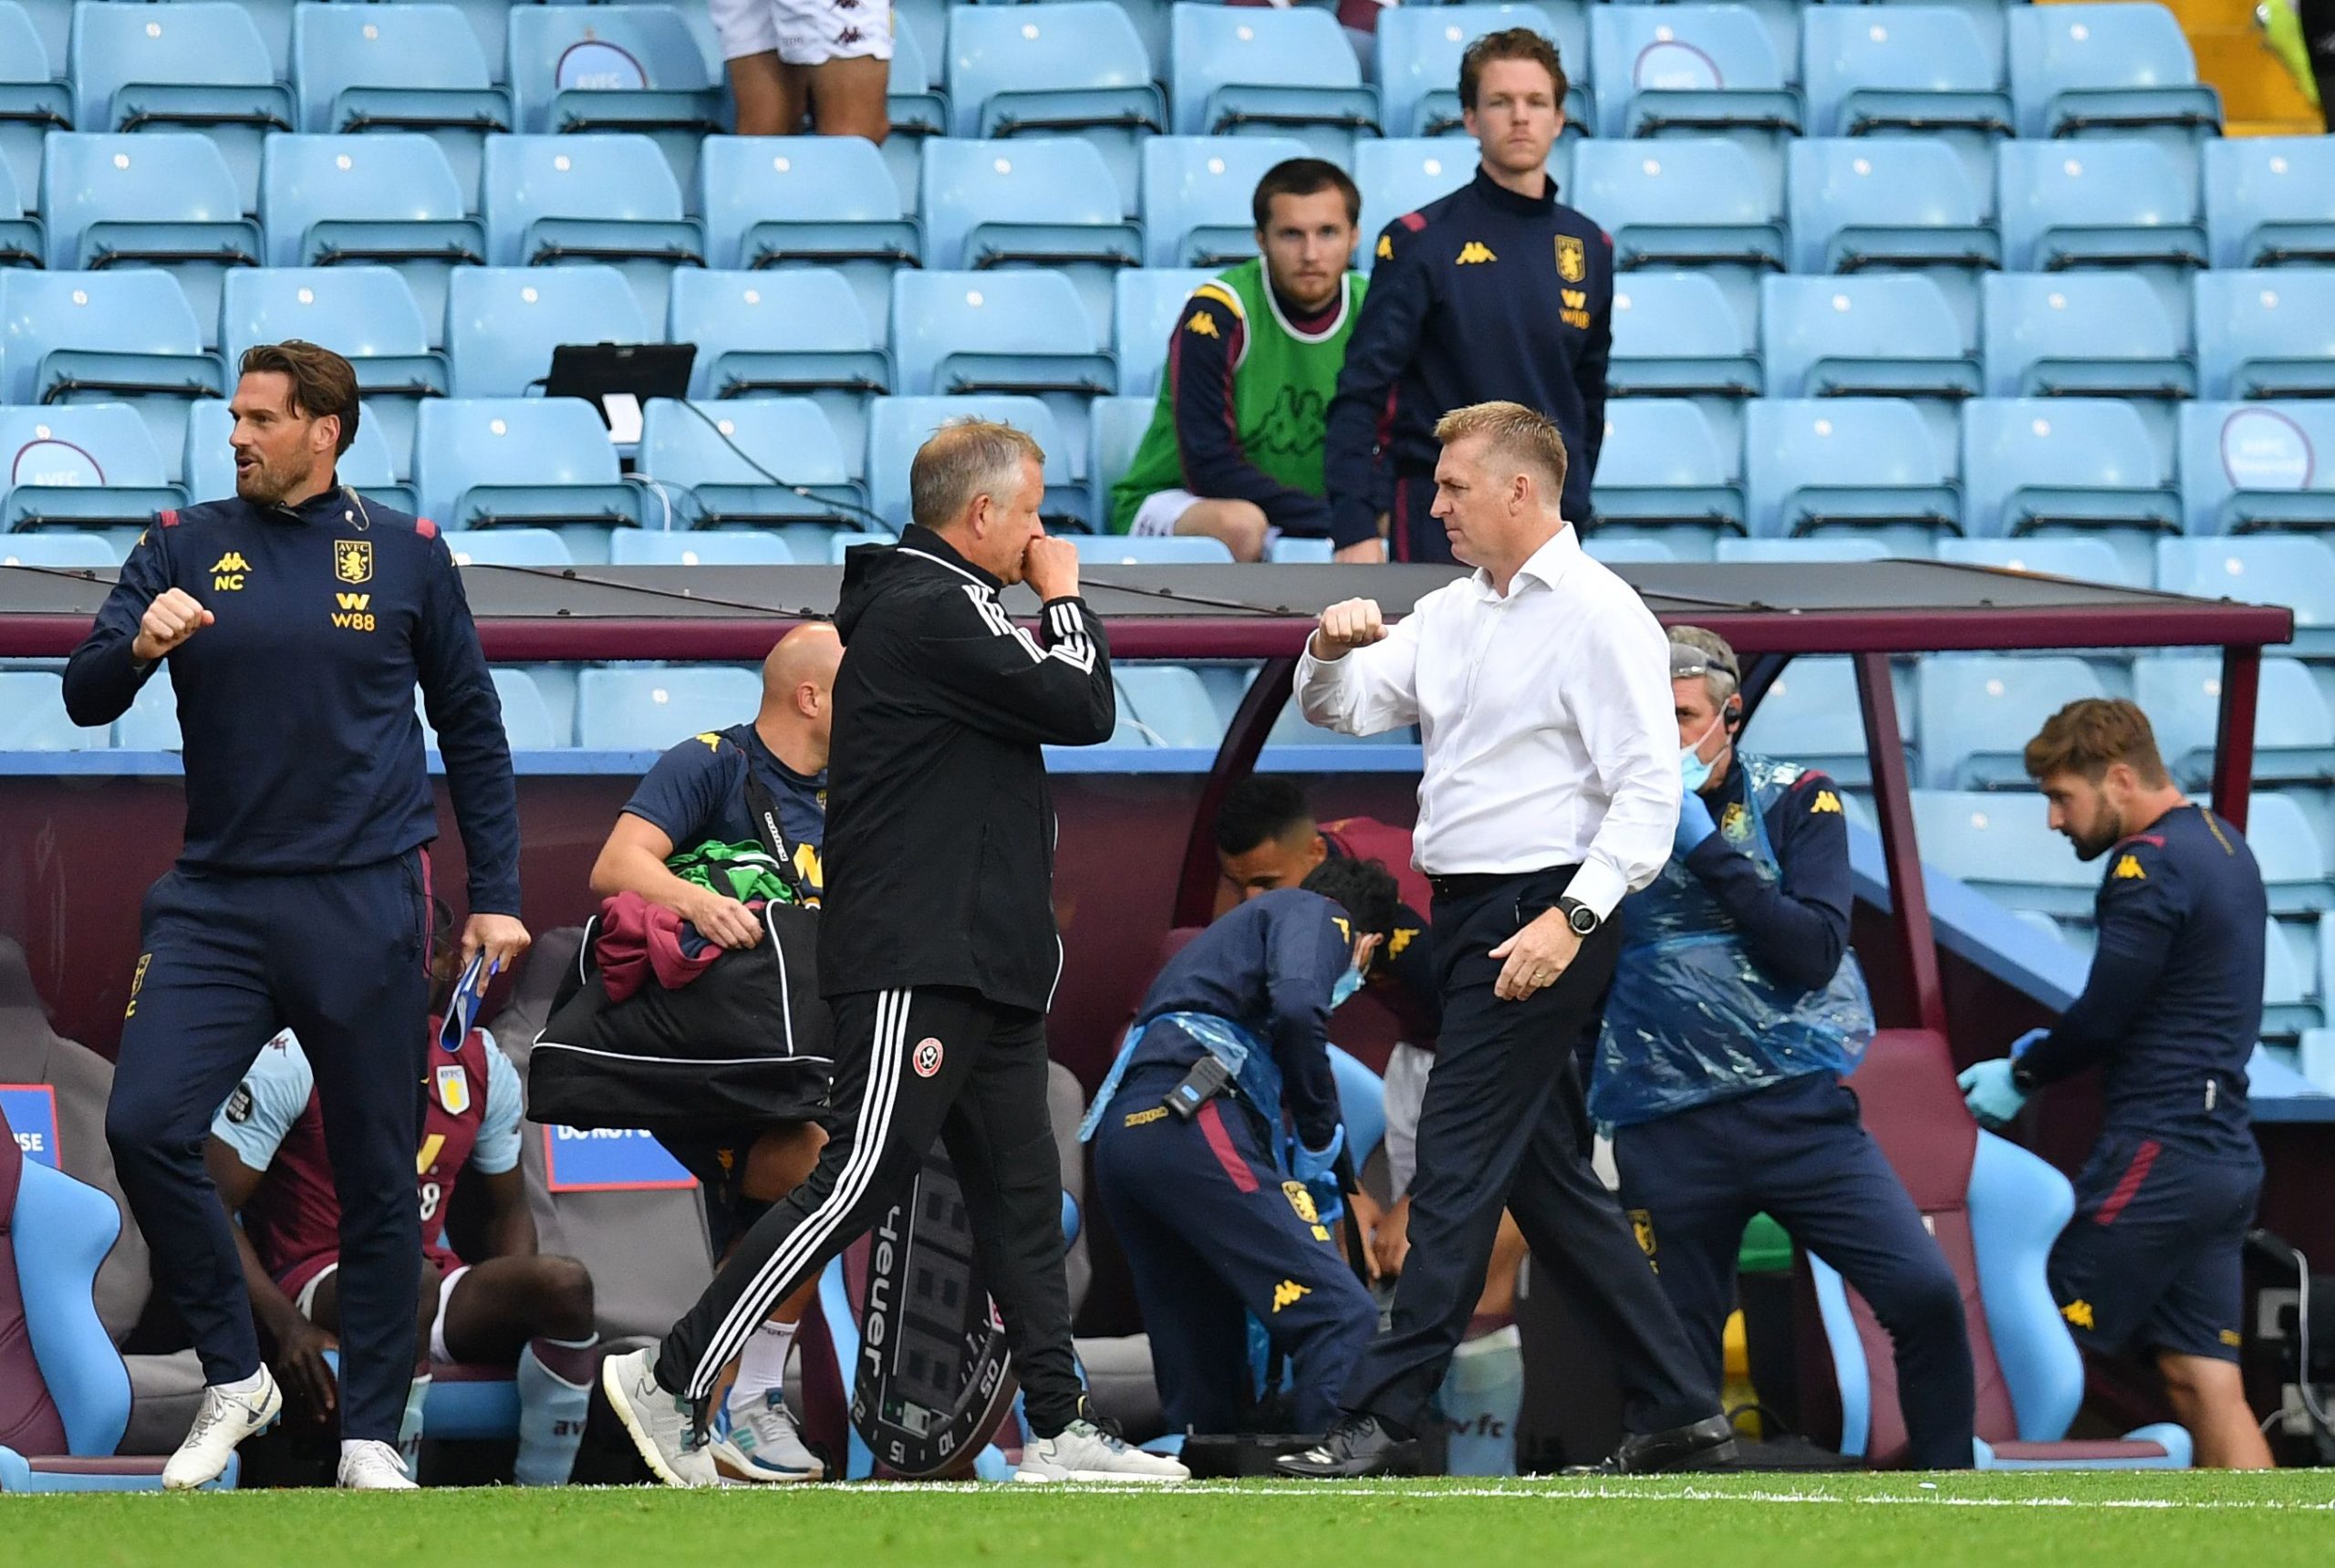 Aston Villa facing heavy competition for Sivert Mannsverk (Aston Villa boss Dean Smith is seen in the photo)